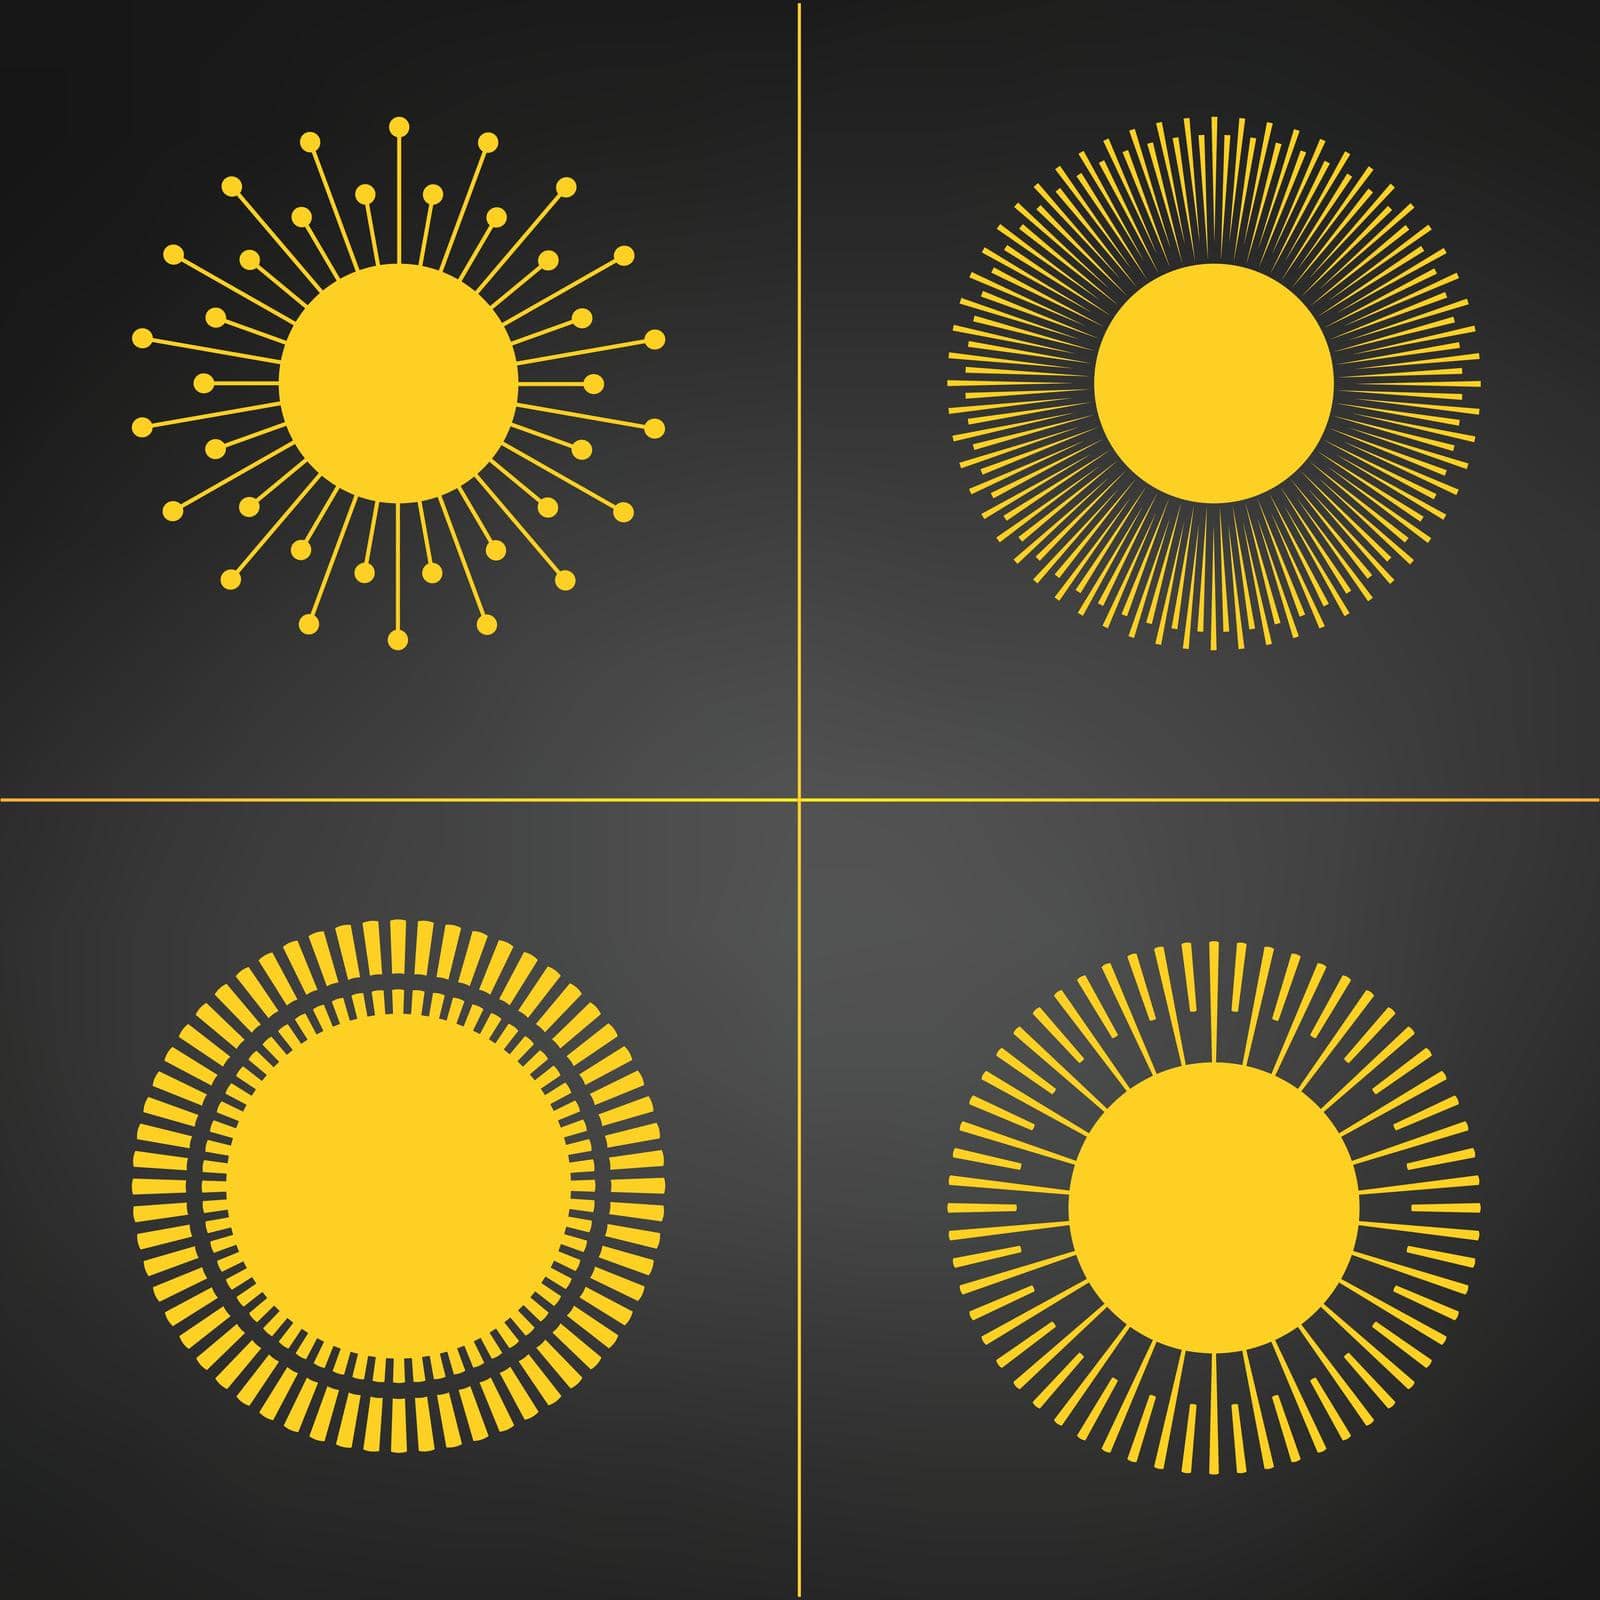 Yellow Sun burst icon or logo. Modern simple flat sunlight, sign. Business, internet concept. Trendy vector summer symbol. Logo Vector illustration